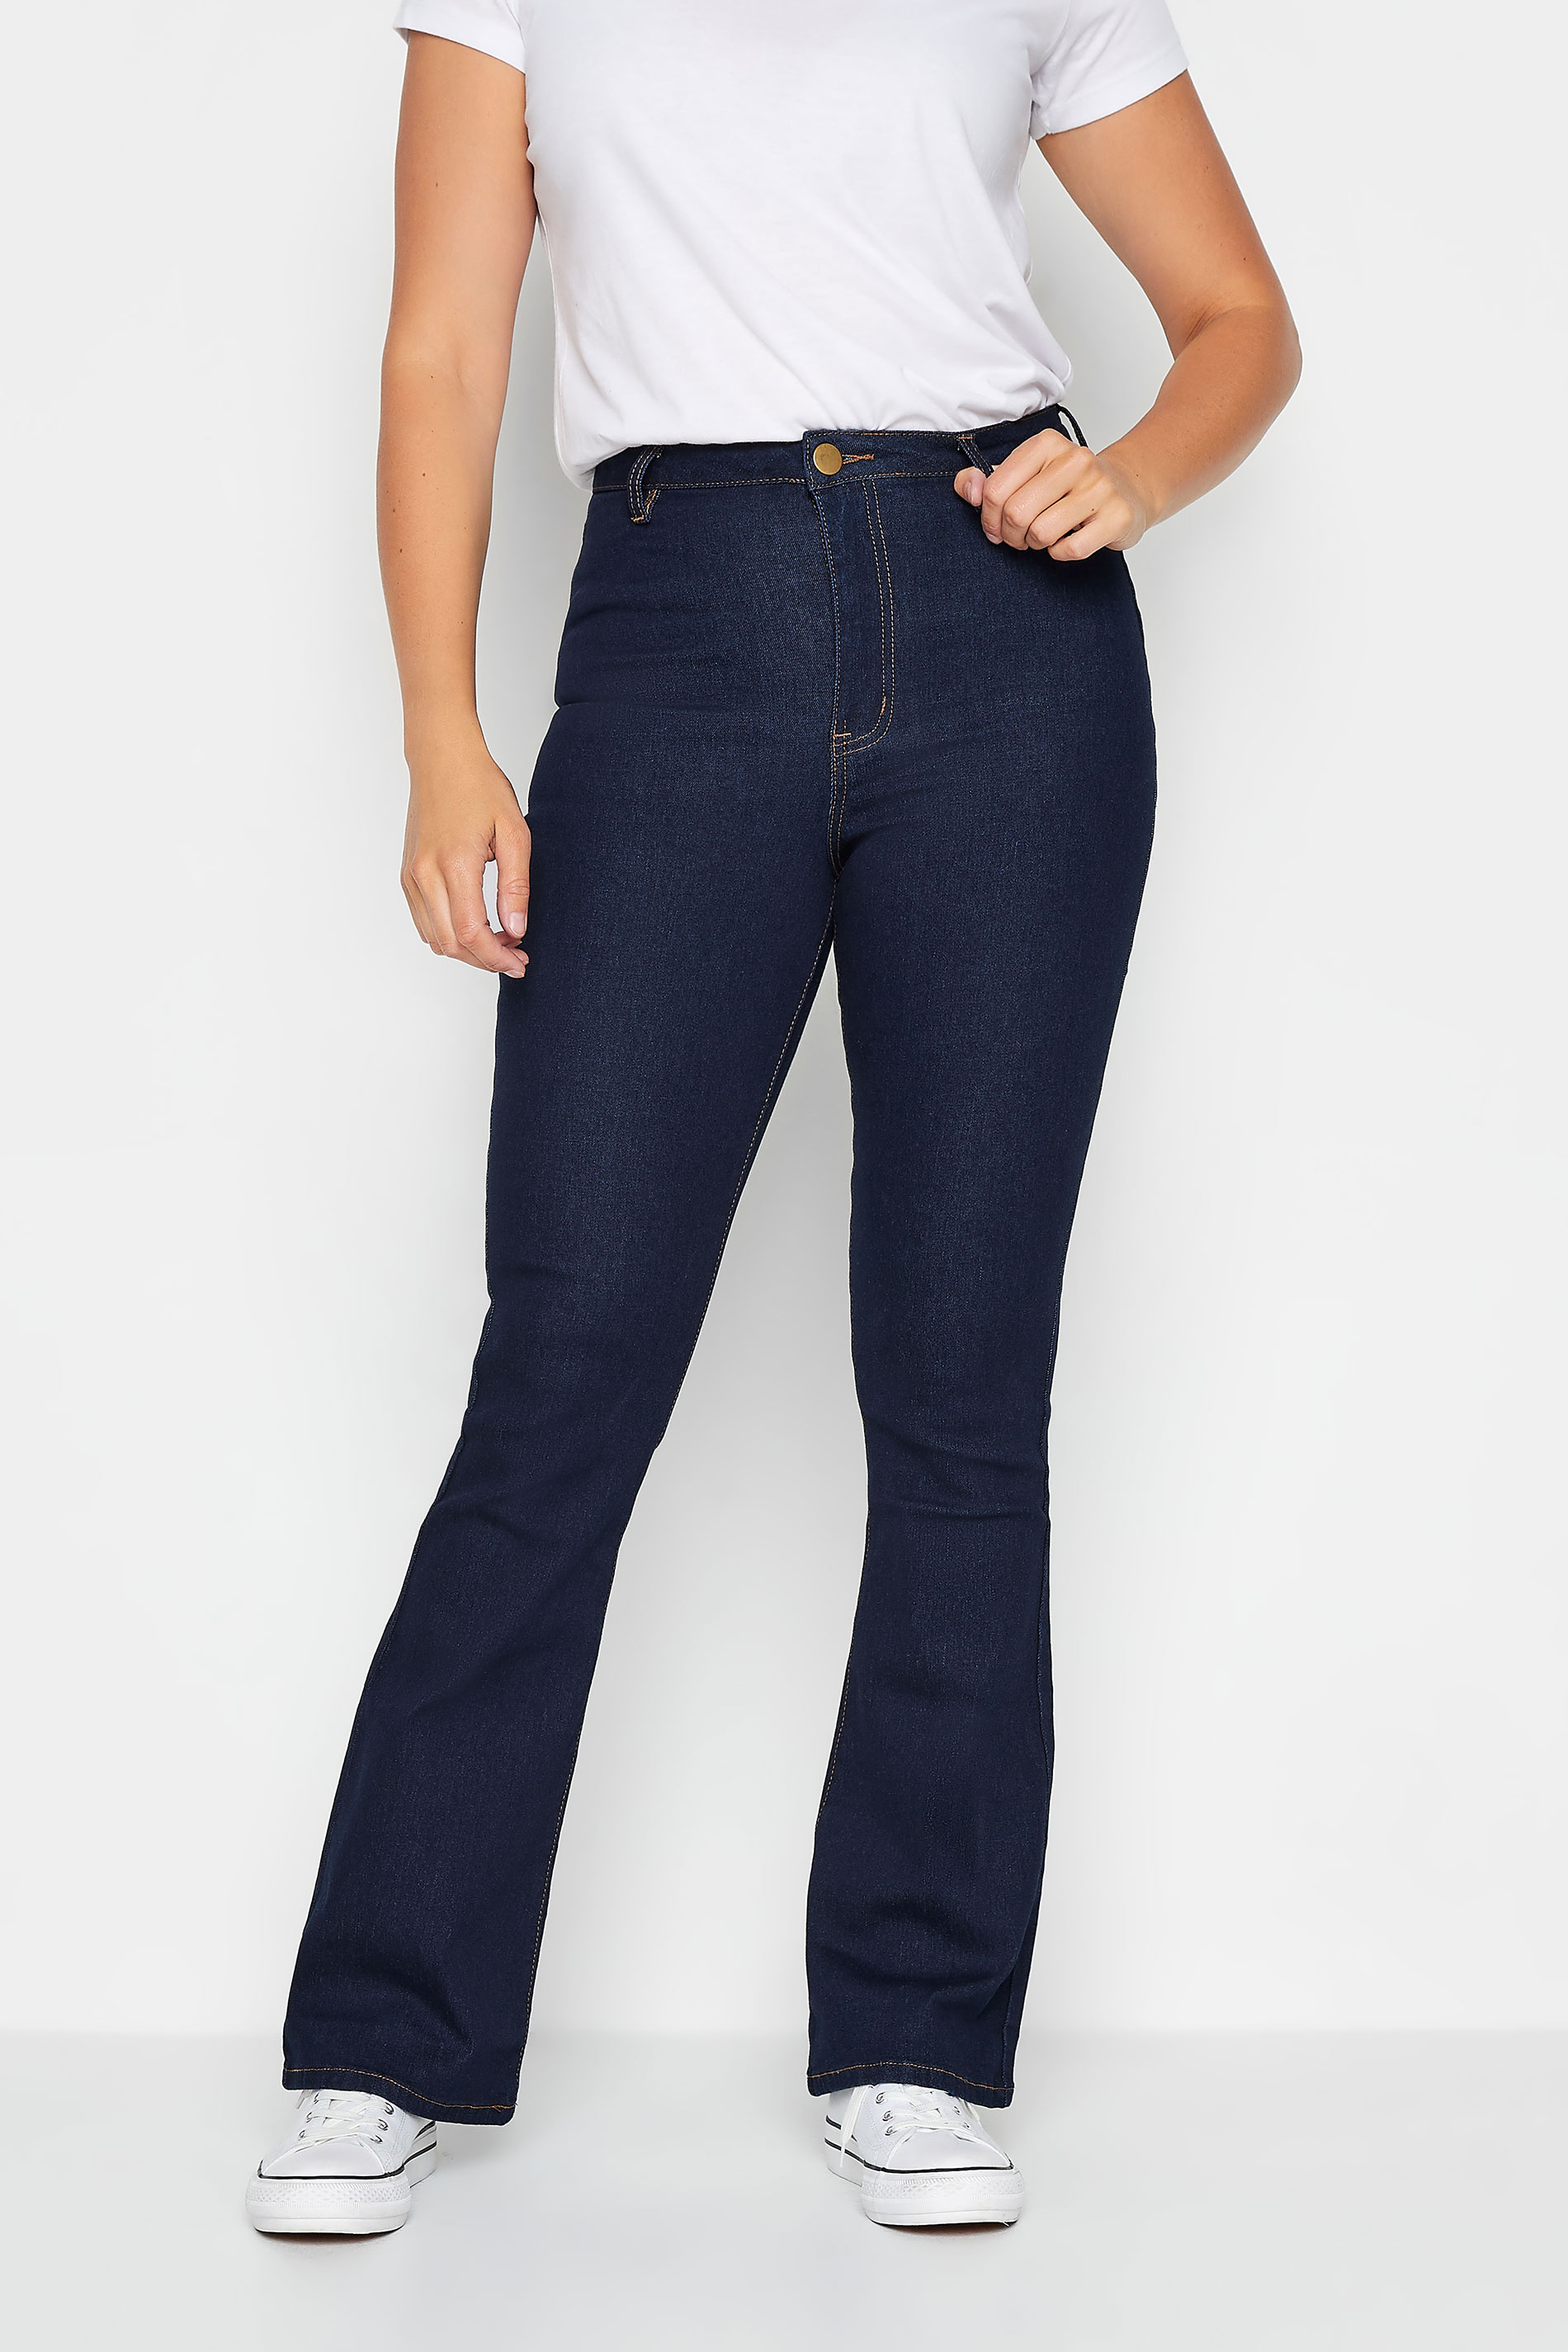 LTS Tall Indigo Blue Denim Flared Jeans | Long Tall Sally 3